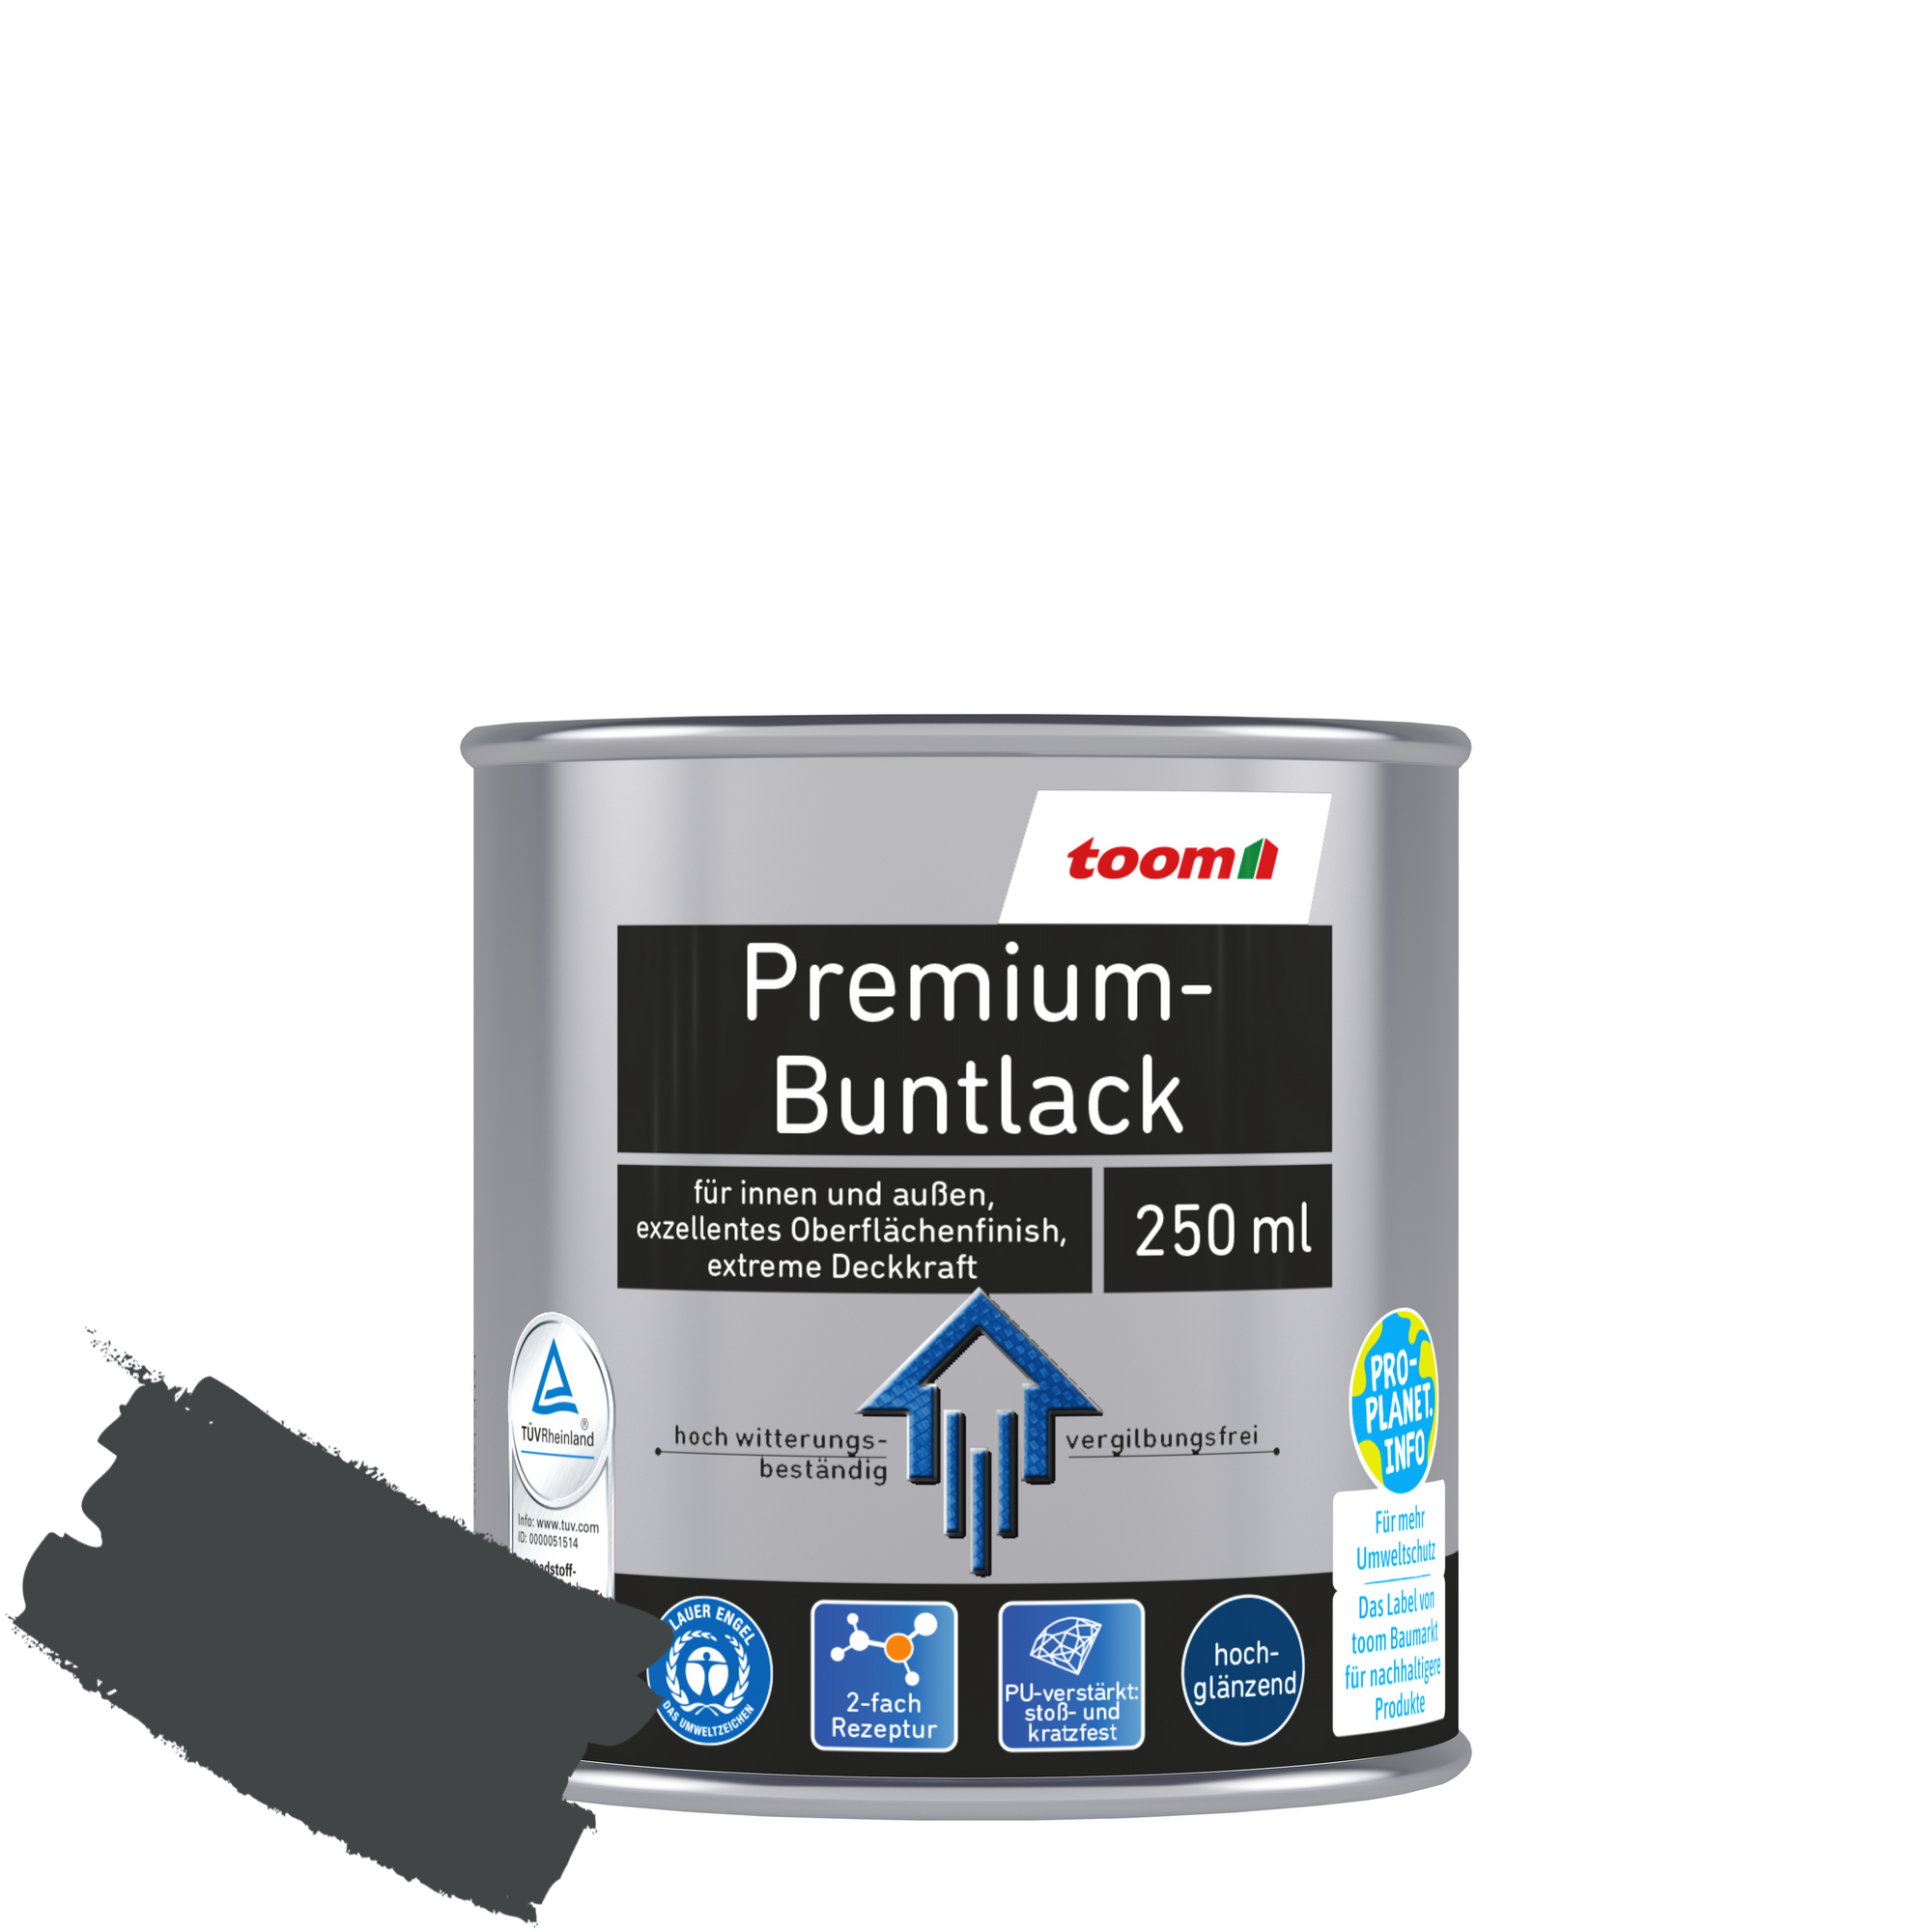 Premium-Buntlack grau glänzend 250 ml + product picture